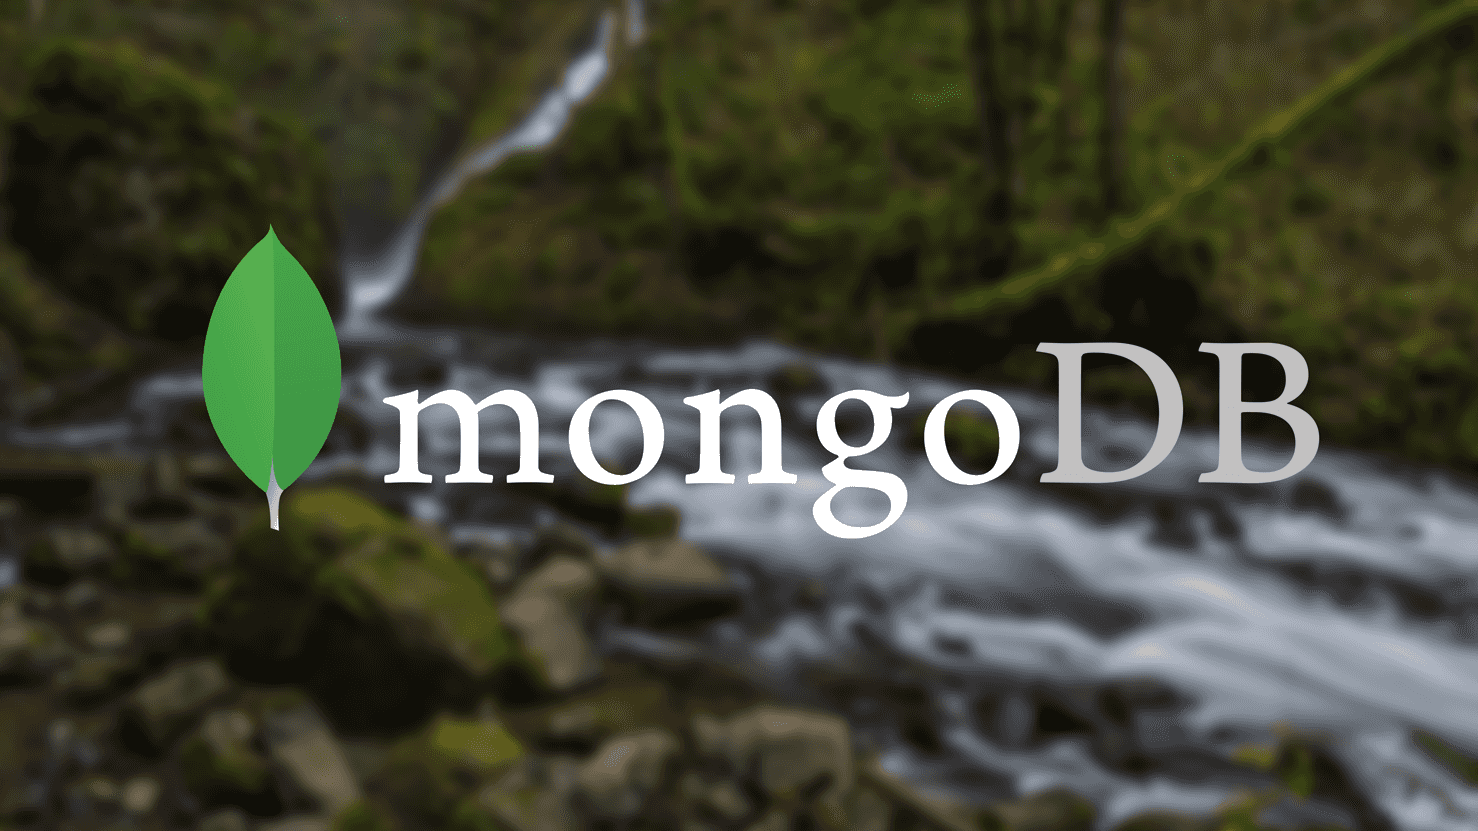 Building a RESTful API using Express js and MongoDB